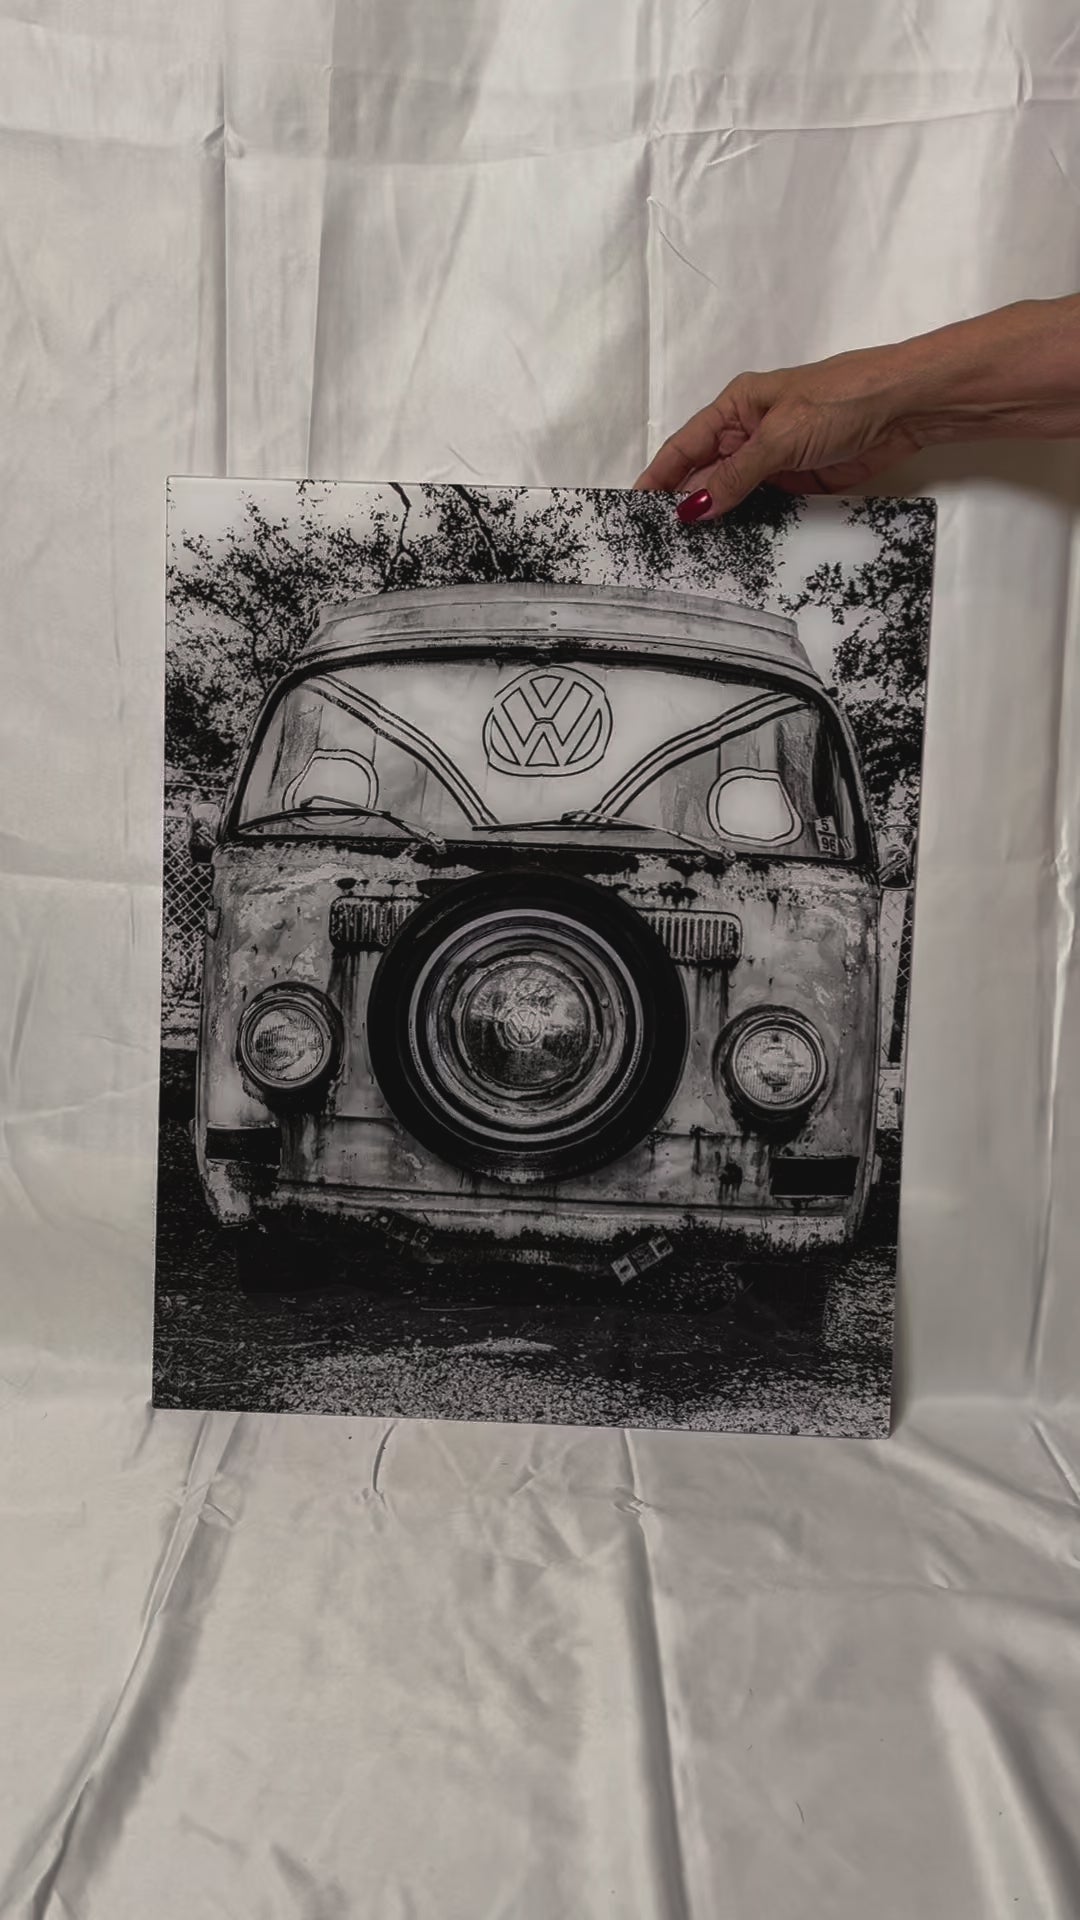 Vintage Volkswagen junkyard van acrylic print preview video